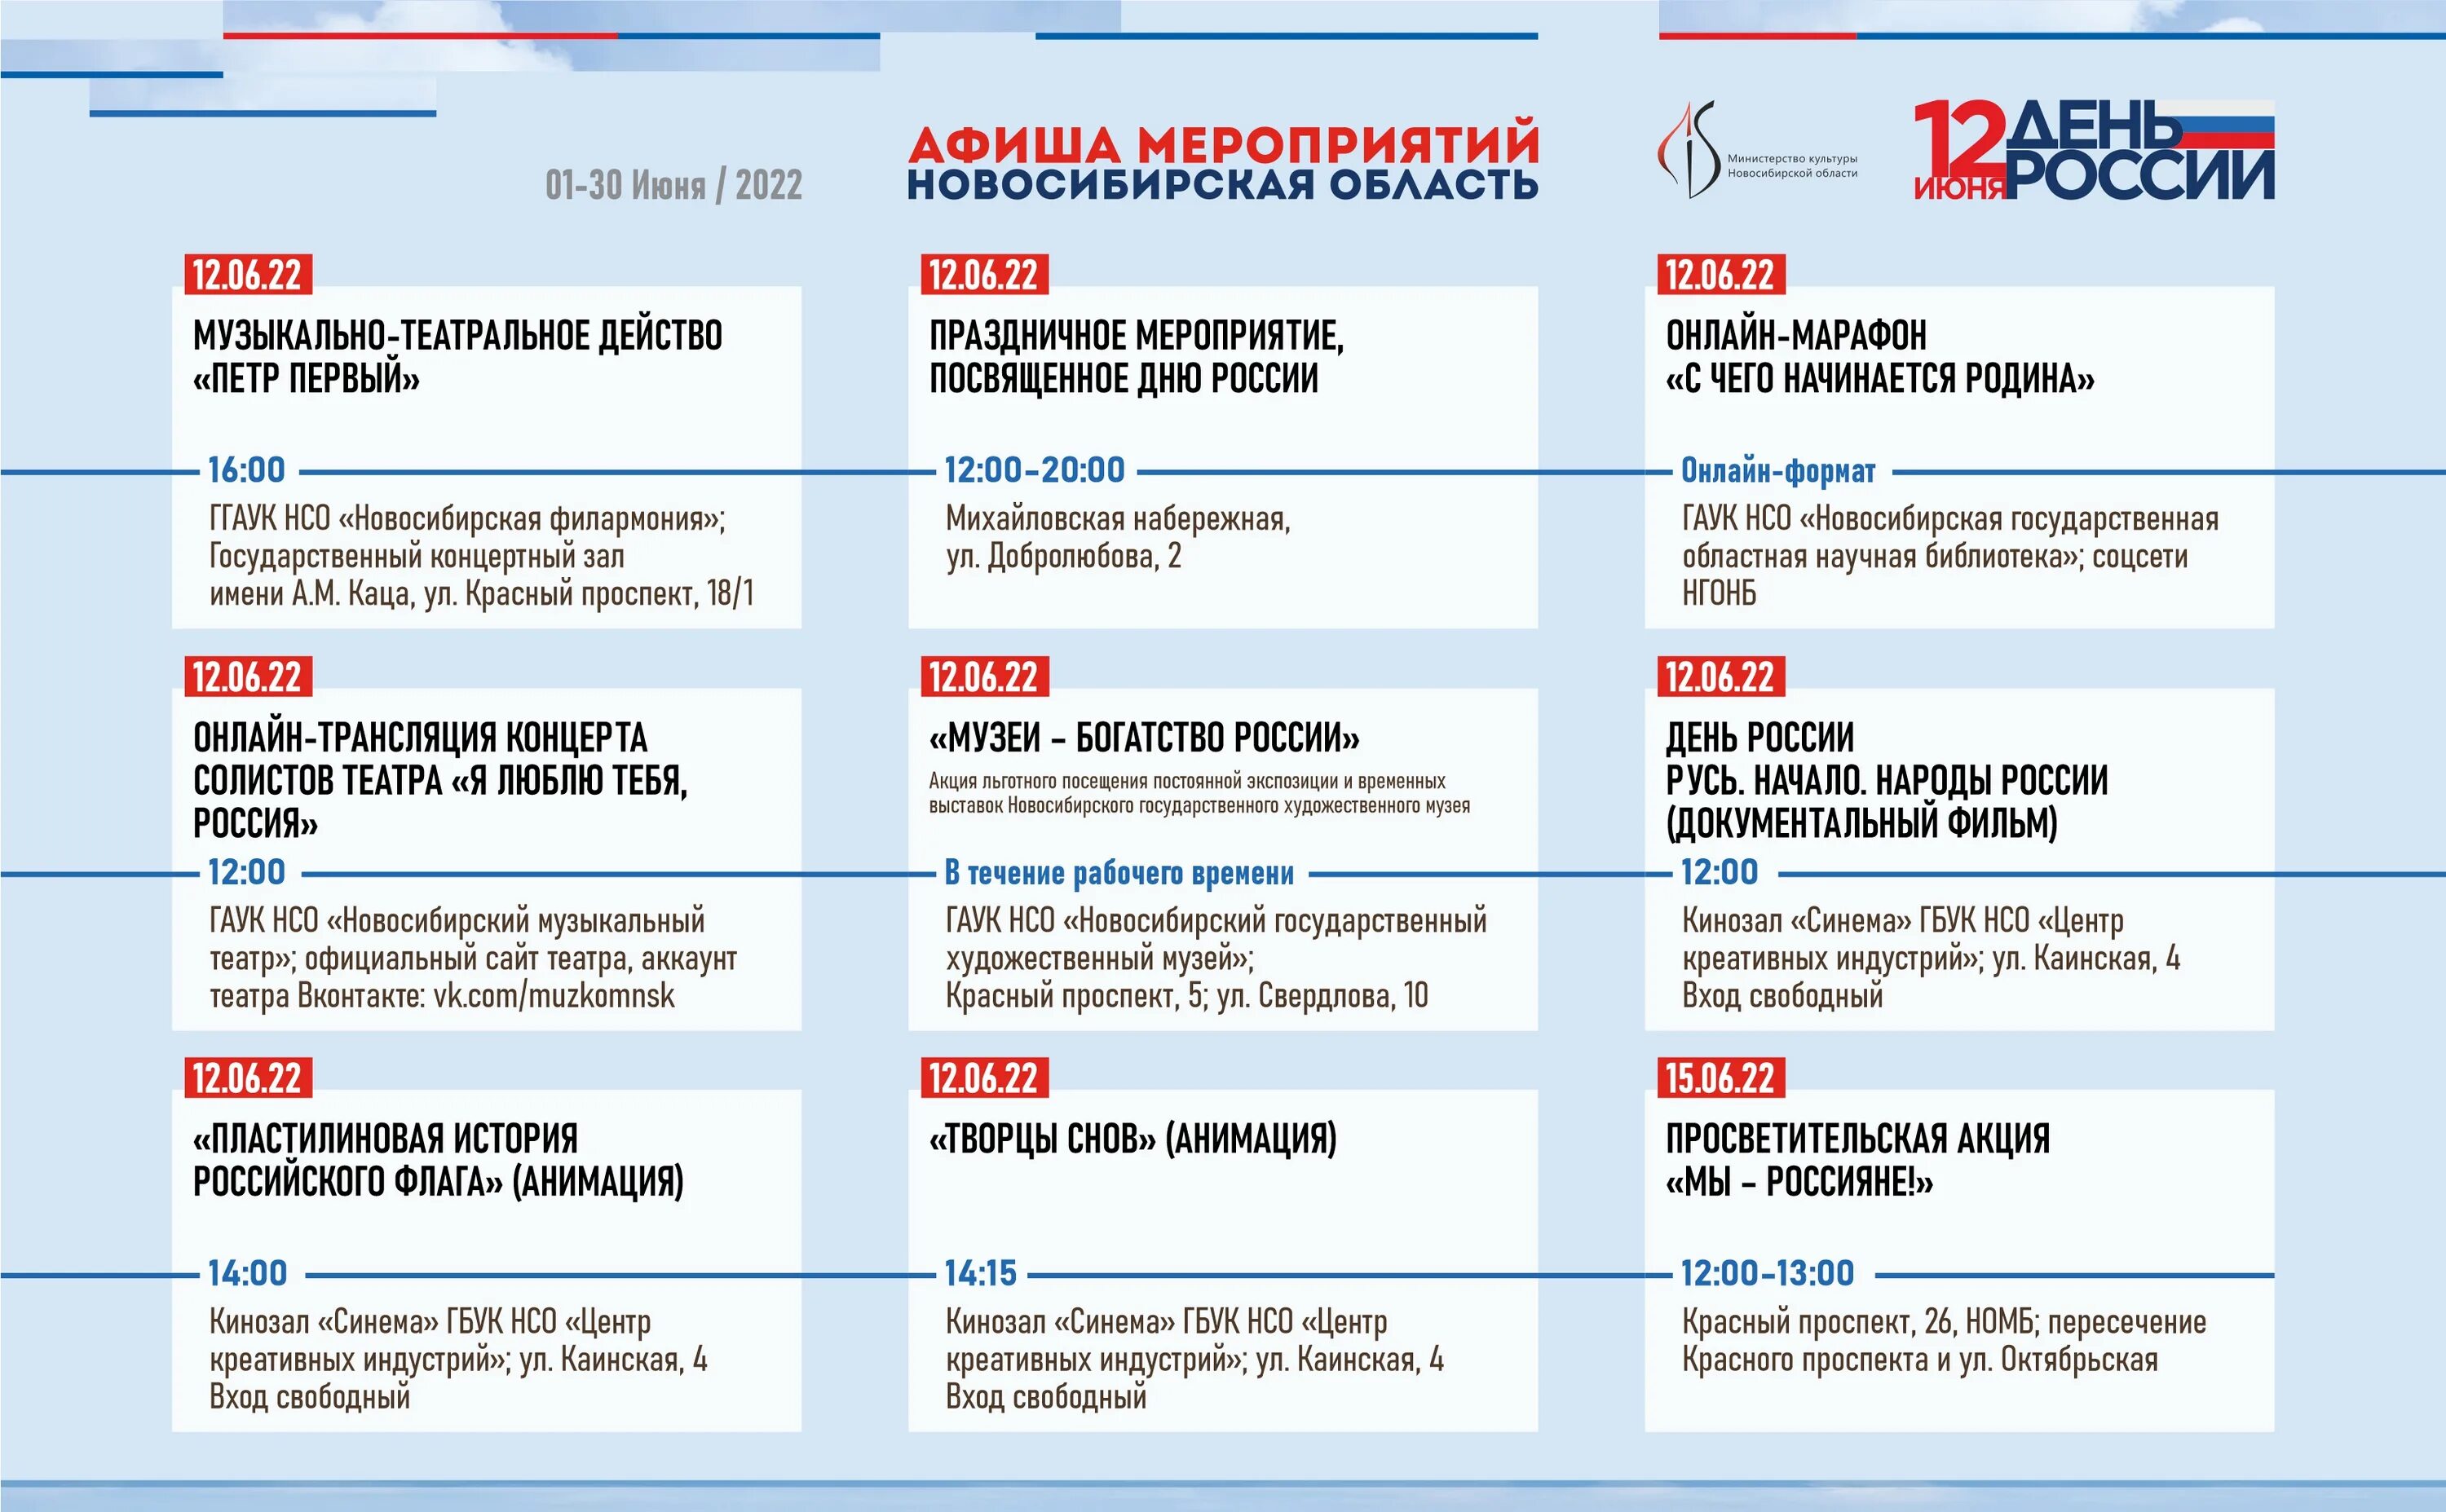 Программа россия 18 апреля. Программа мероприятия. День России 2022 мероприятия. Программа мероприятия дизайн.